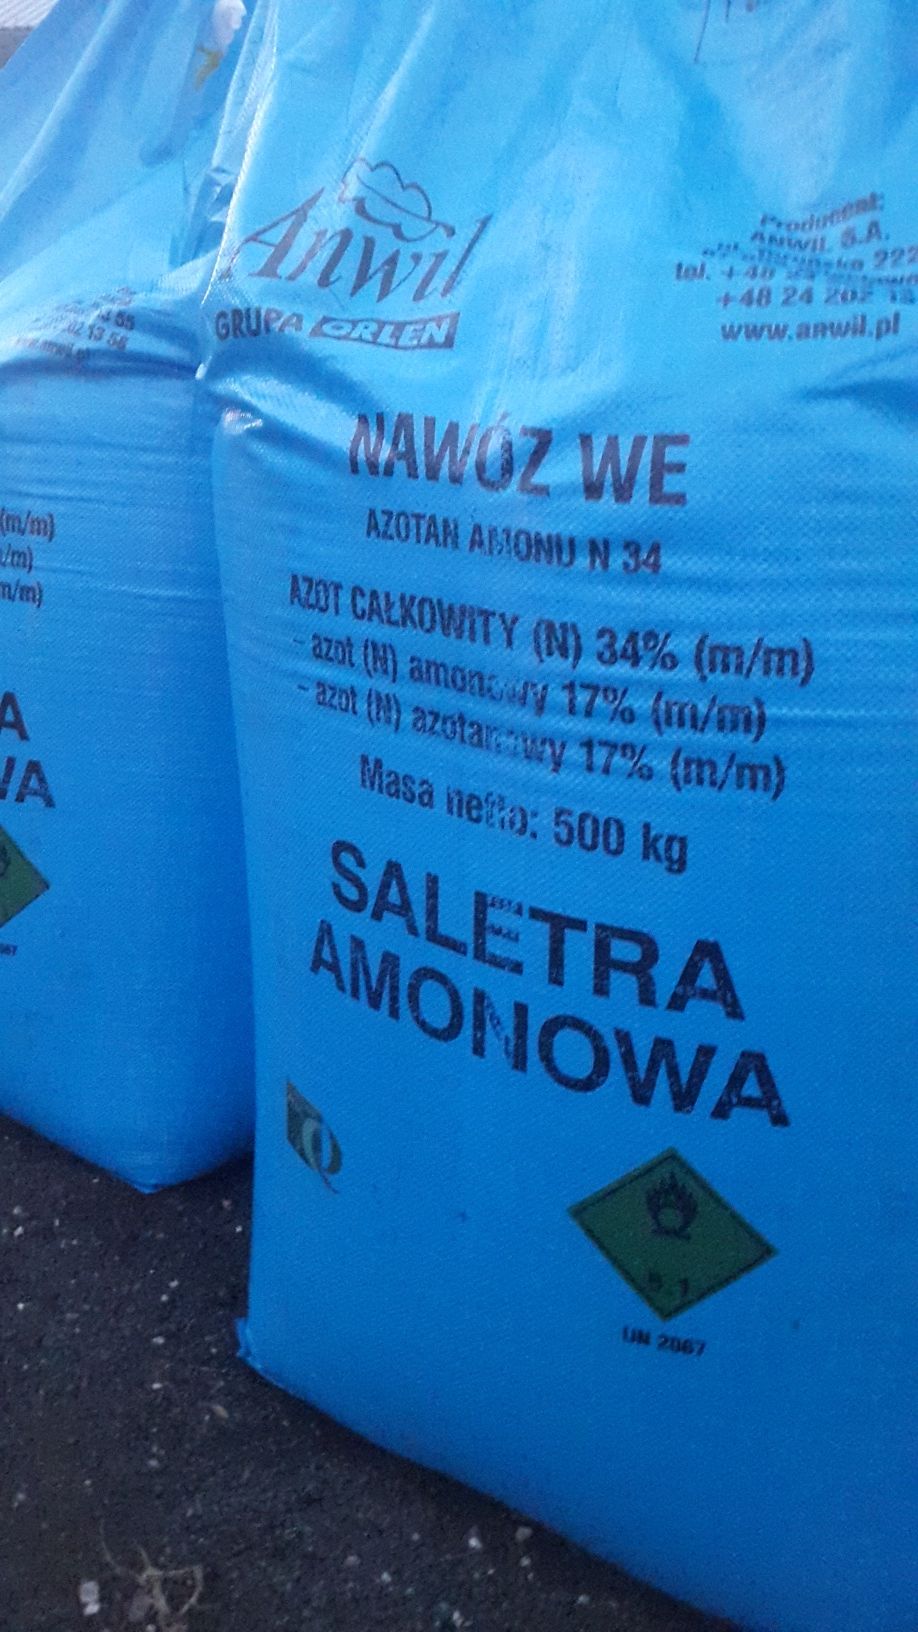 Saletra Amonowa 34% big bag 500kg